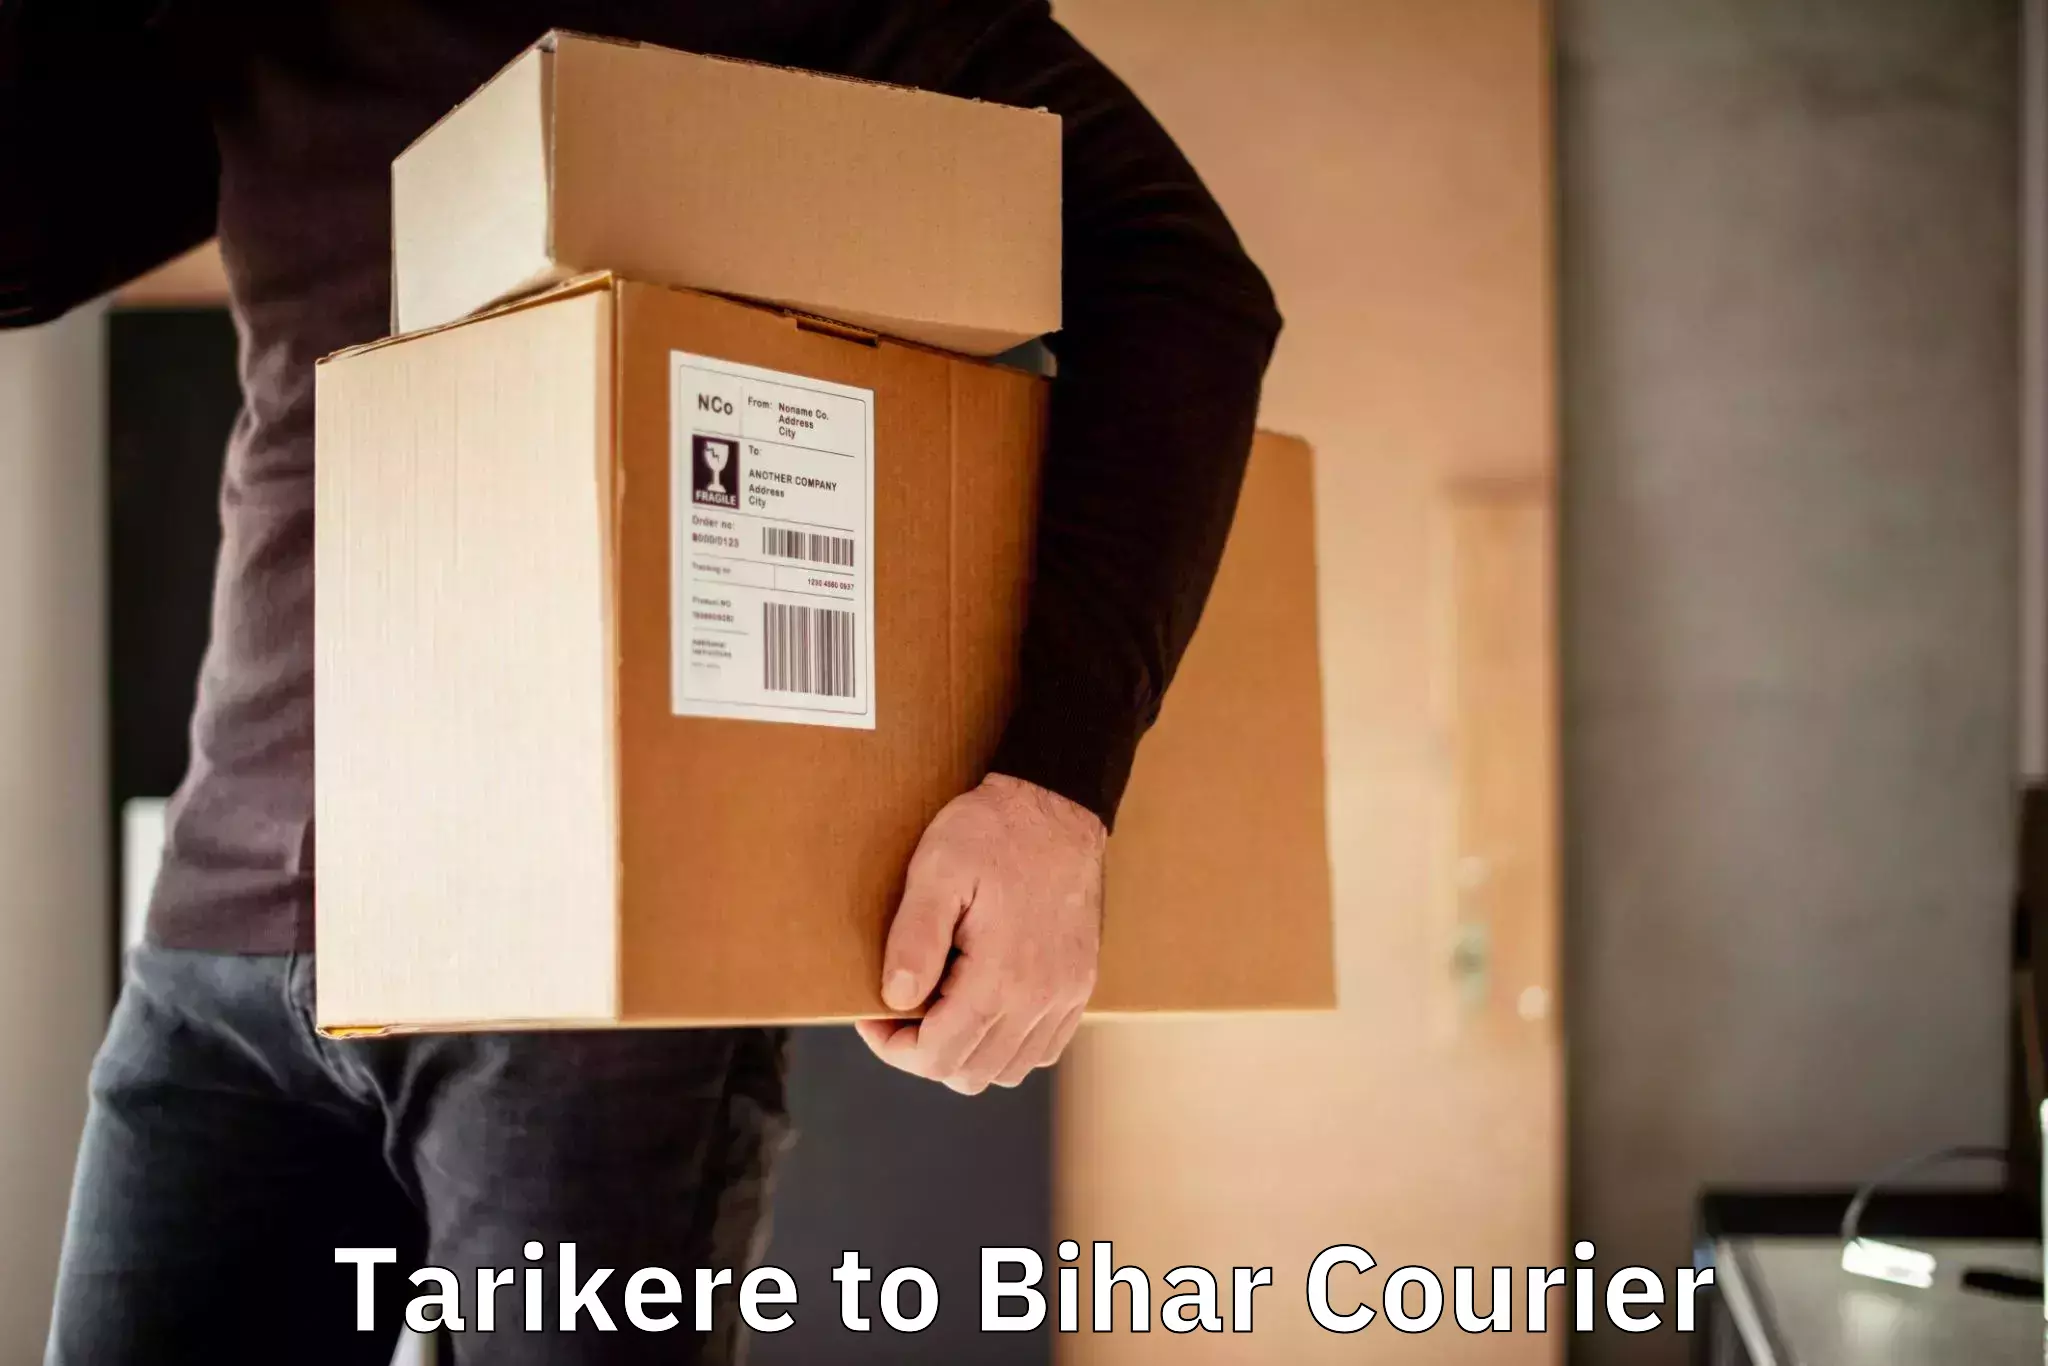 International courier networks Tarikere to Bihar